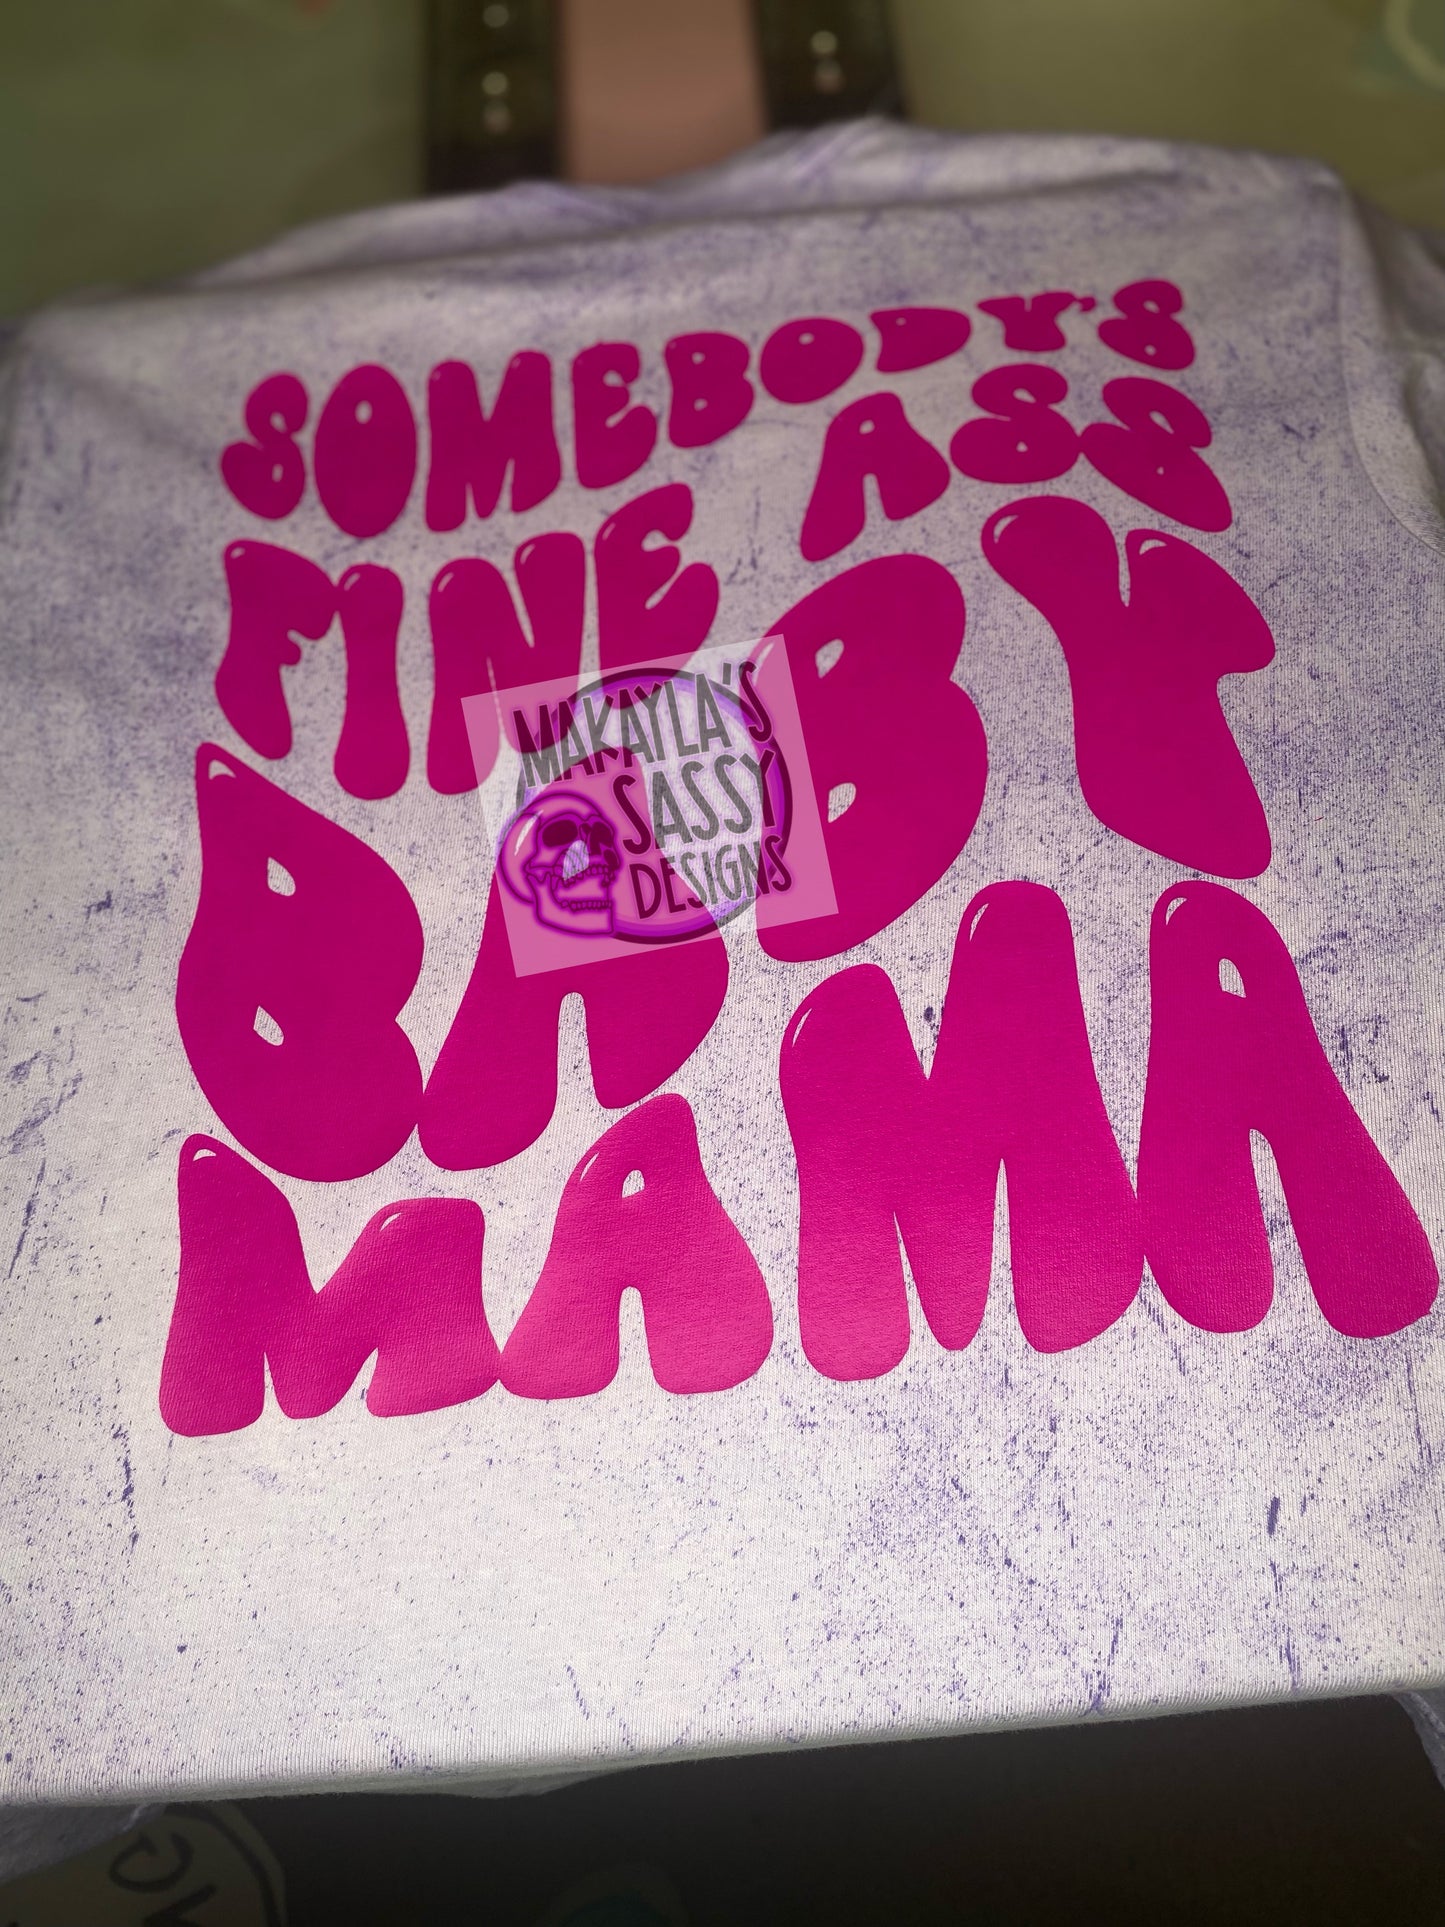 Somebody’s Fine Ass Baby Mama